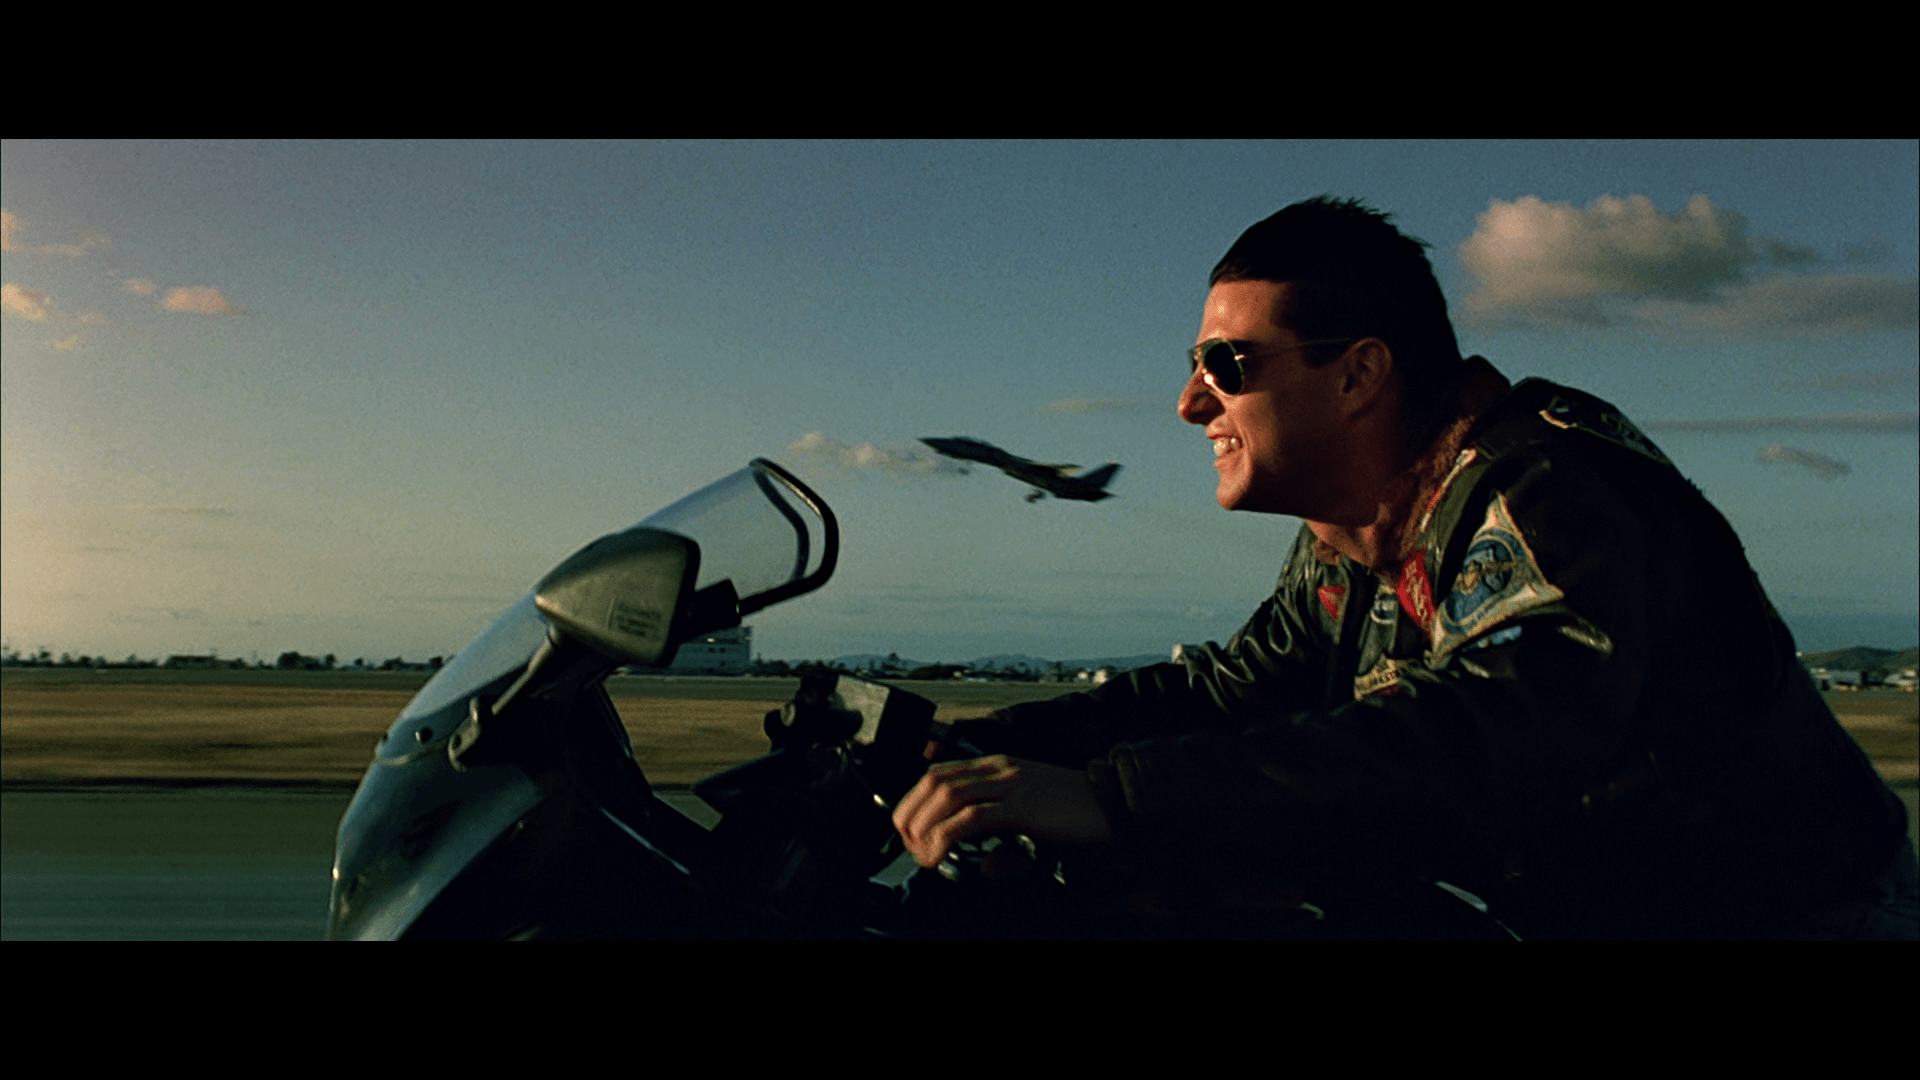 Movies That Everyone Should See: “Top Gun” « Fogs' Movie Reviews